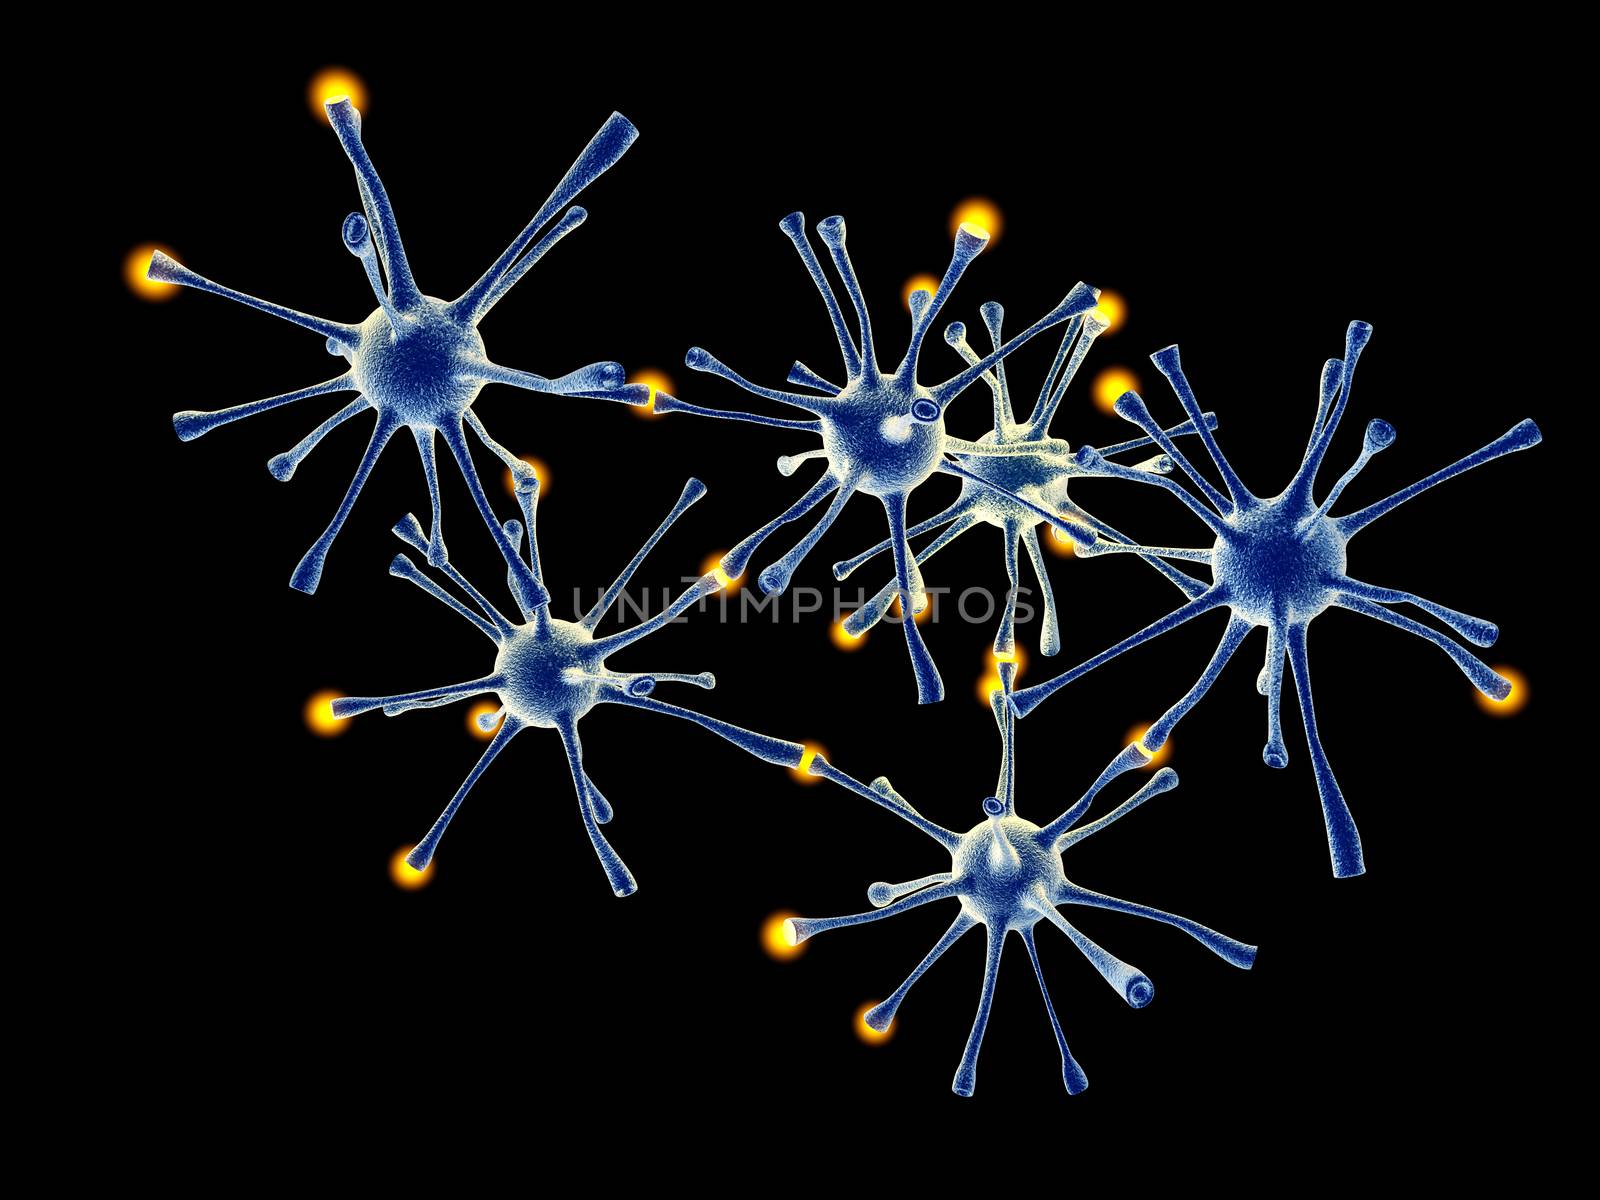 Neuronal Network	 by Spectral